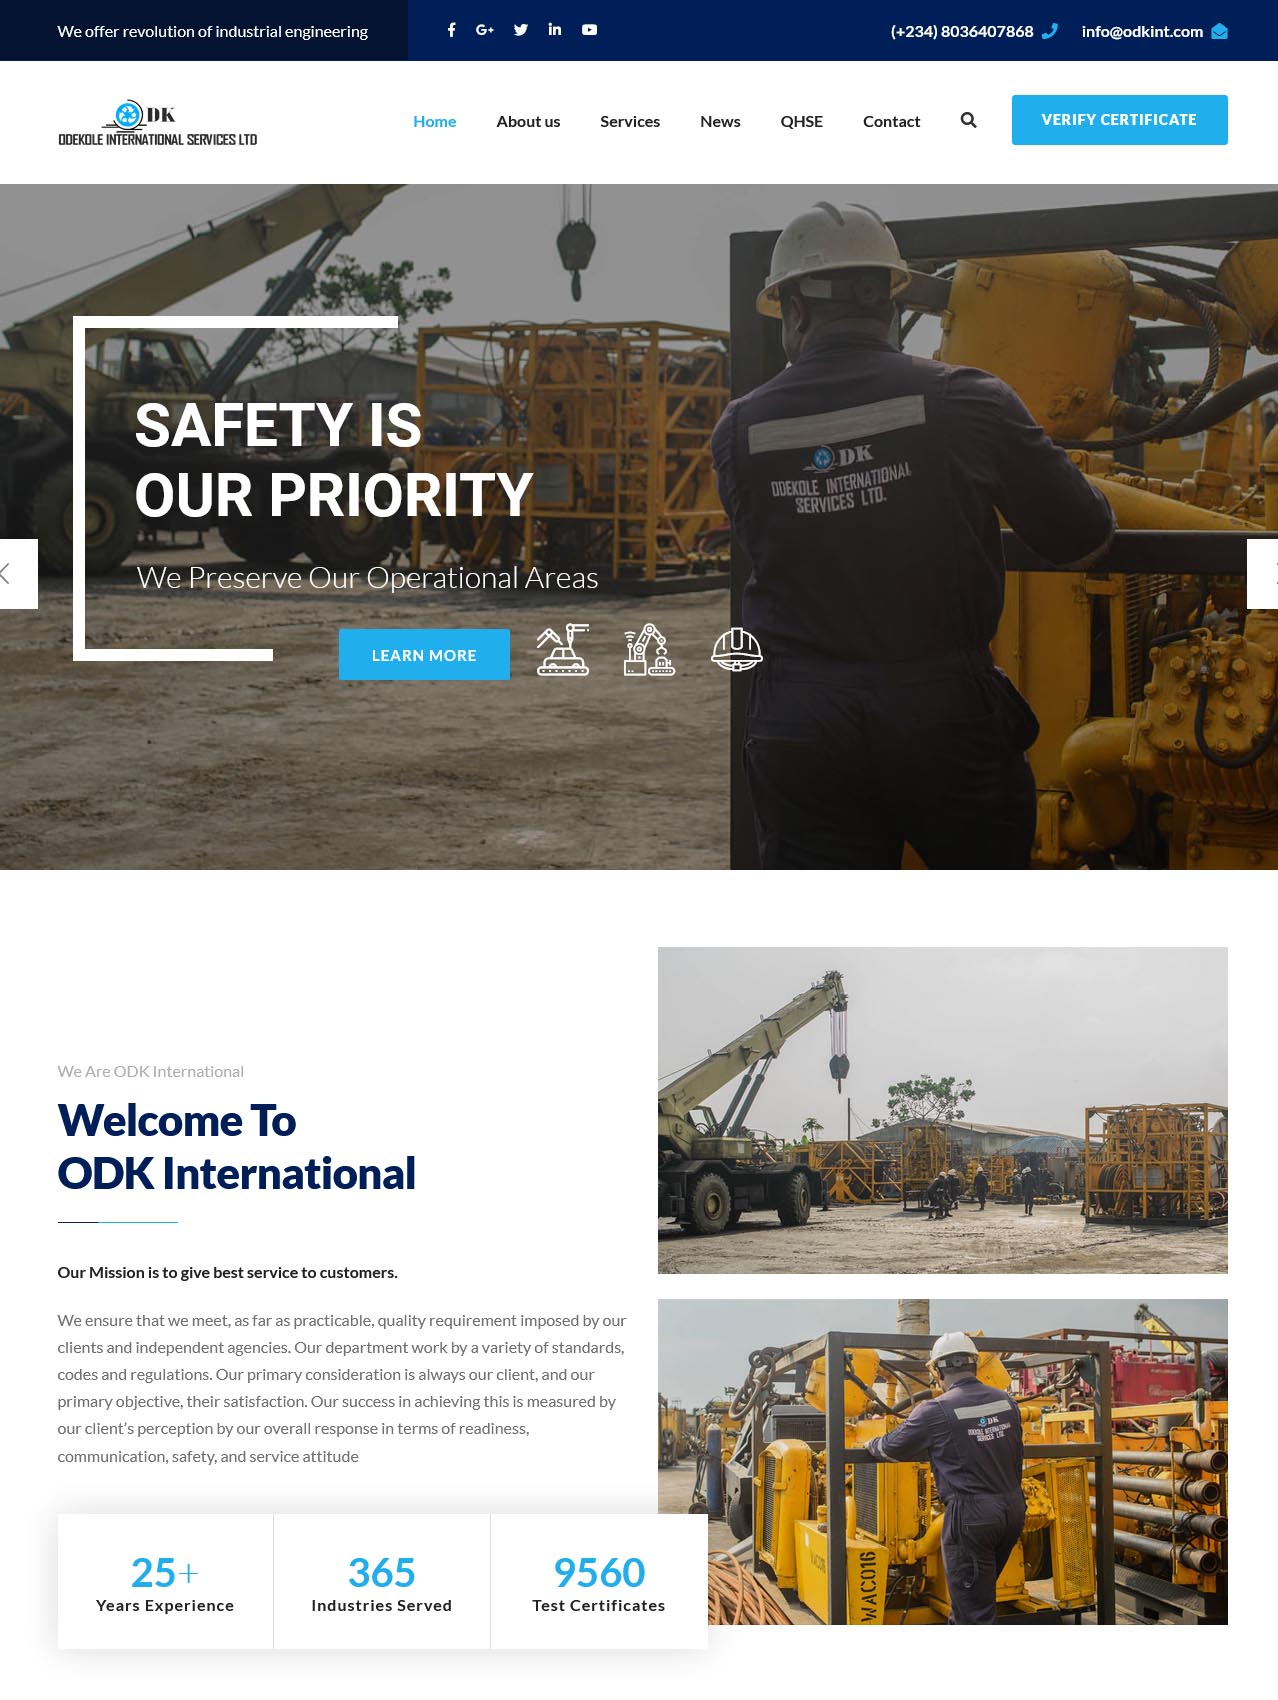 ODK International Services Limited